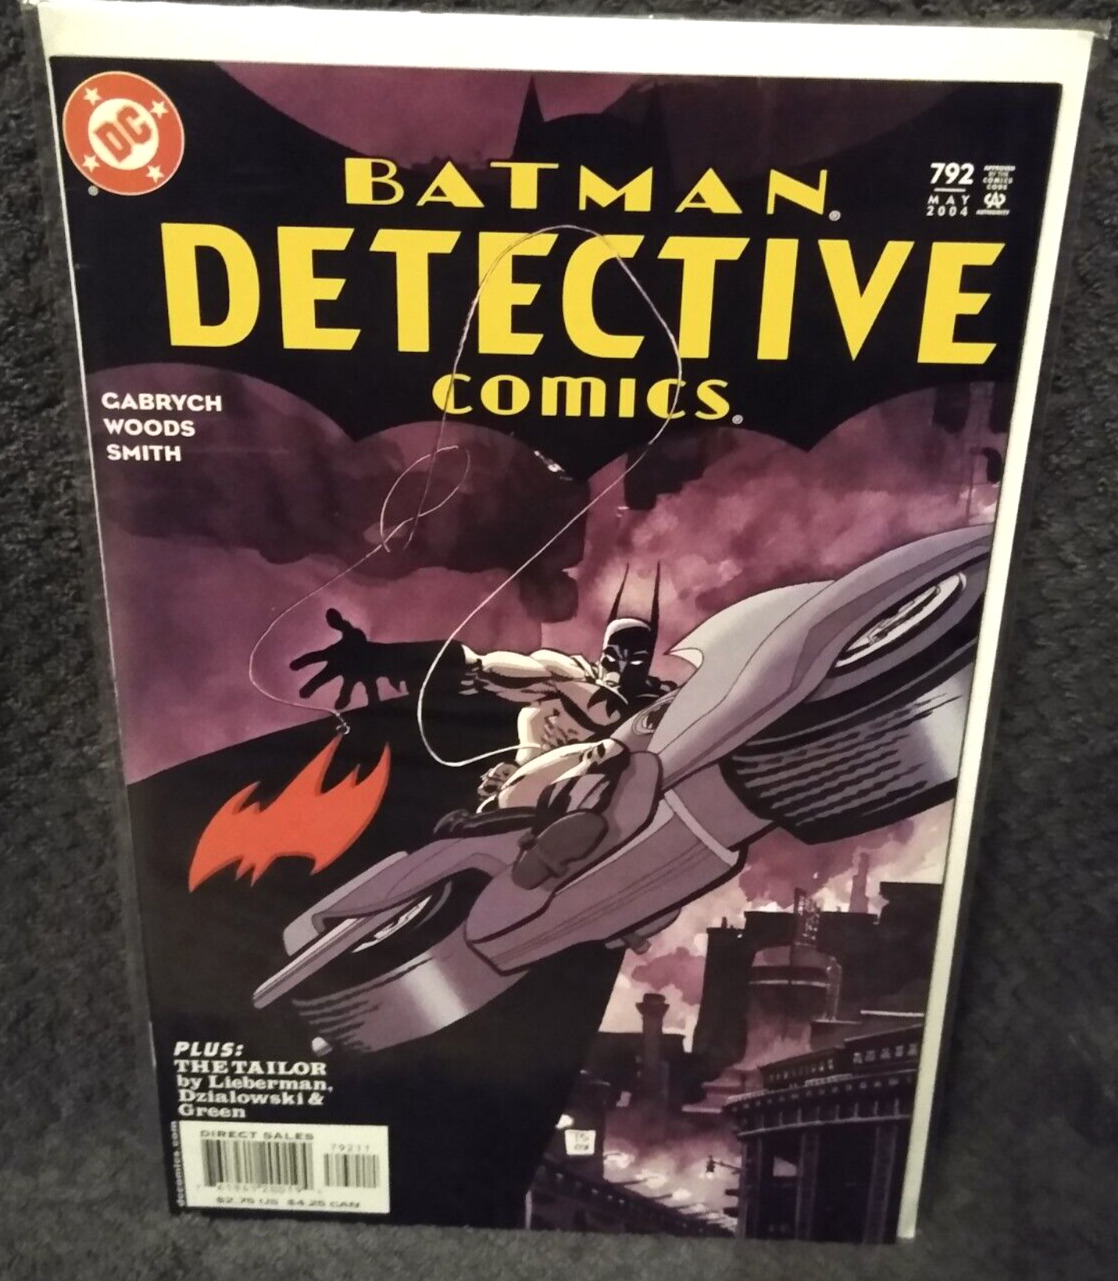 DETECTIVE COMICS #792 NM 2004 DC Comics - Tim Sale cover - Pete Woods art